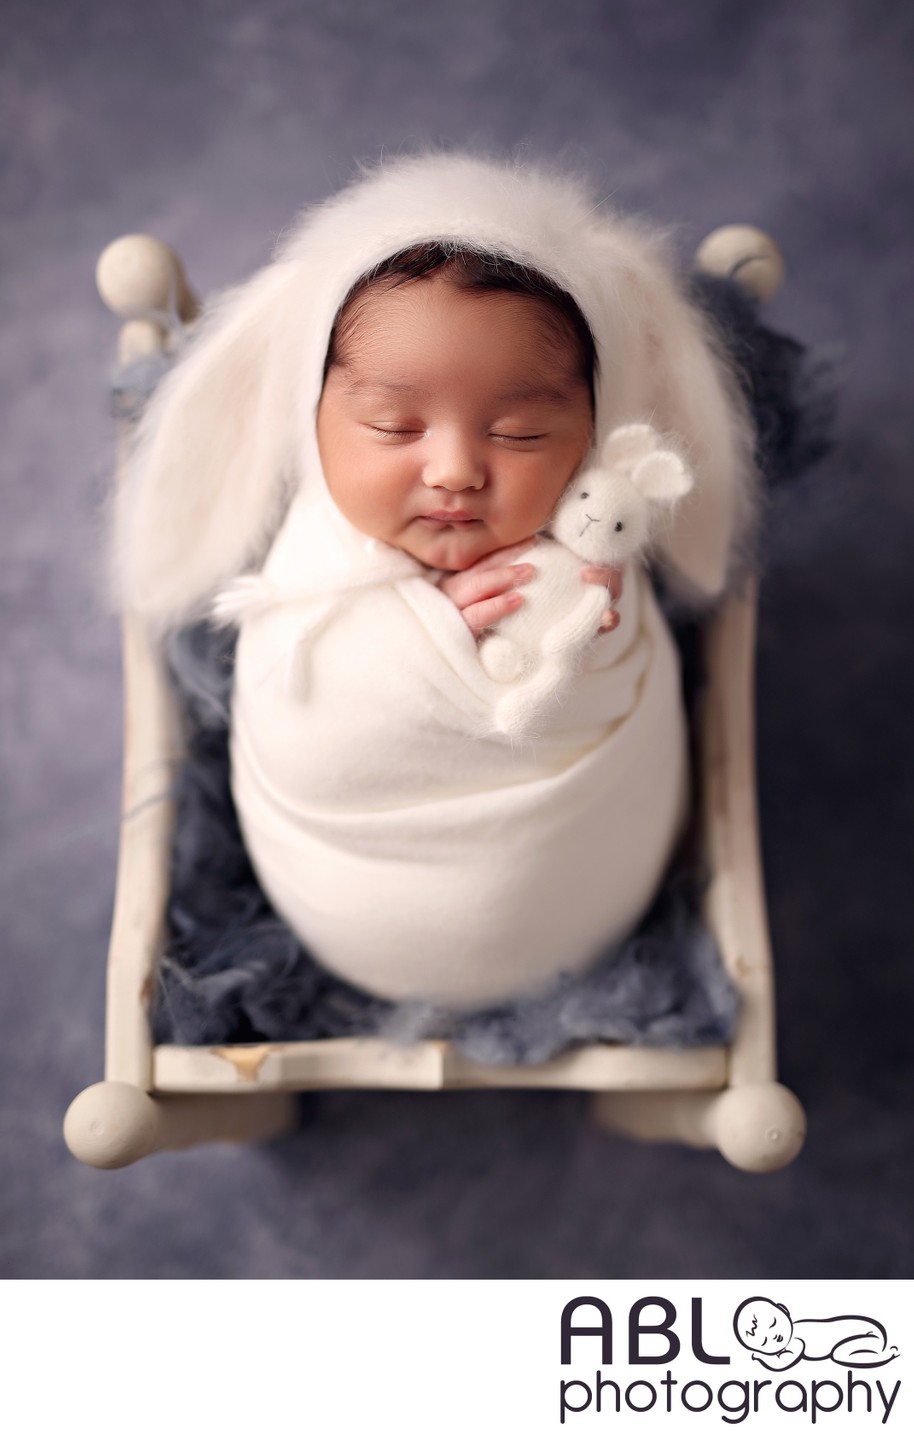 Newborn baby with fluffy bunny hat